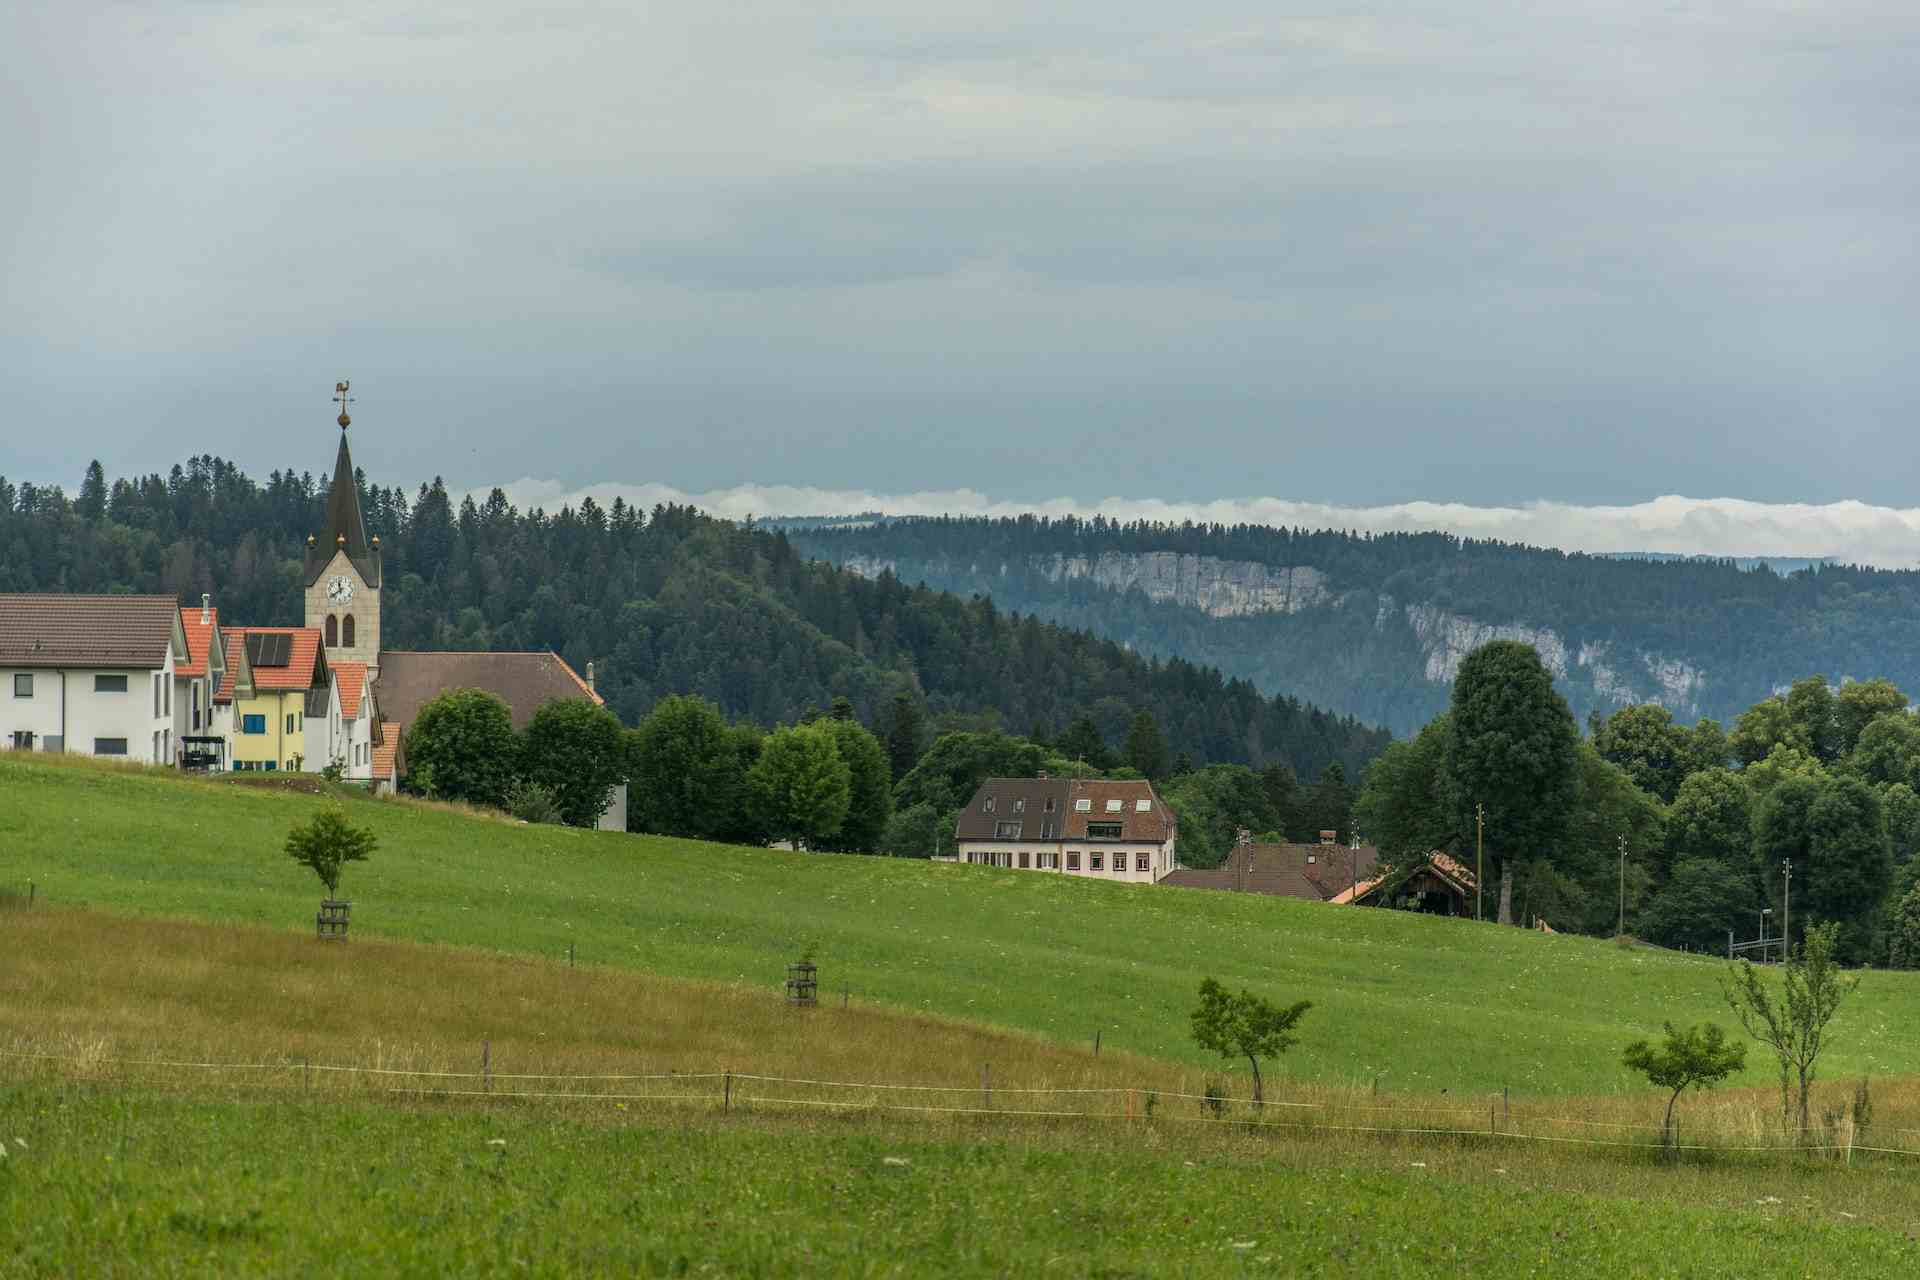 Biohof Krindenhubel, producer in Ringoldswil canton of Bern in Switzerland